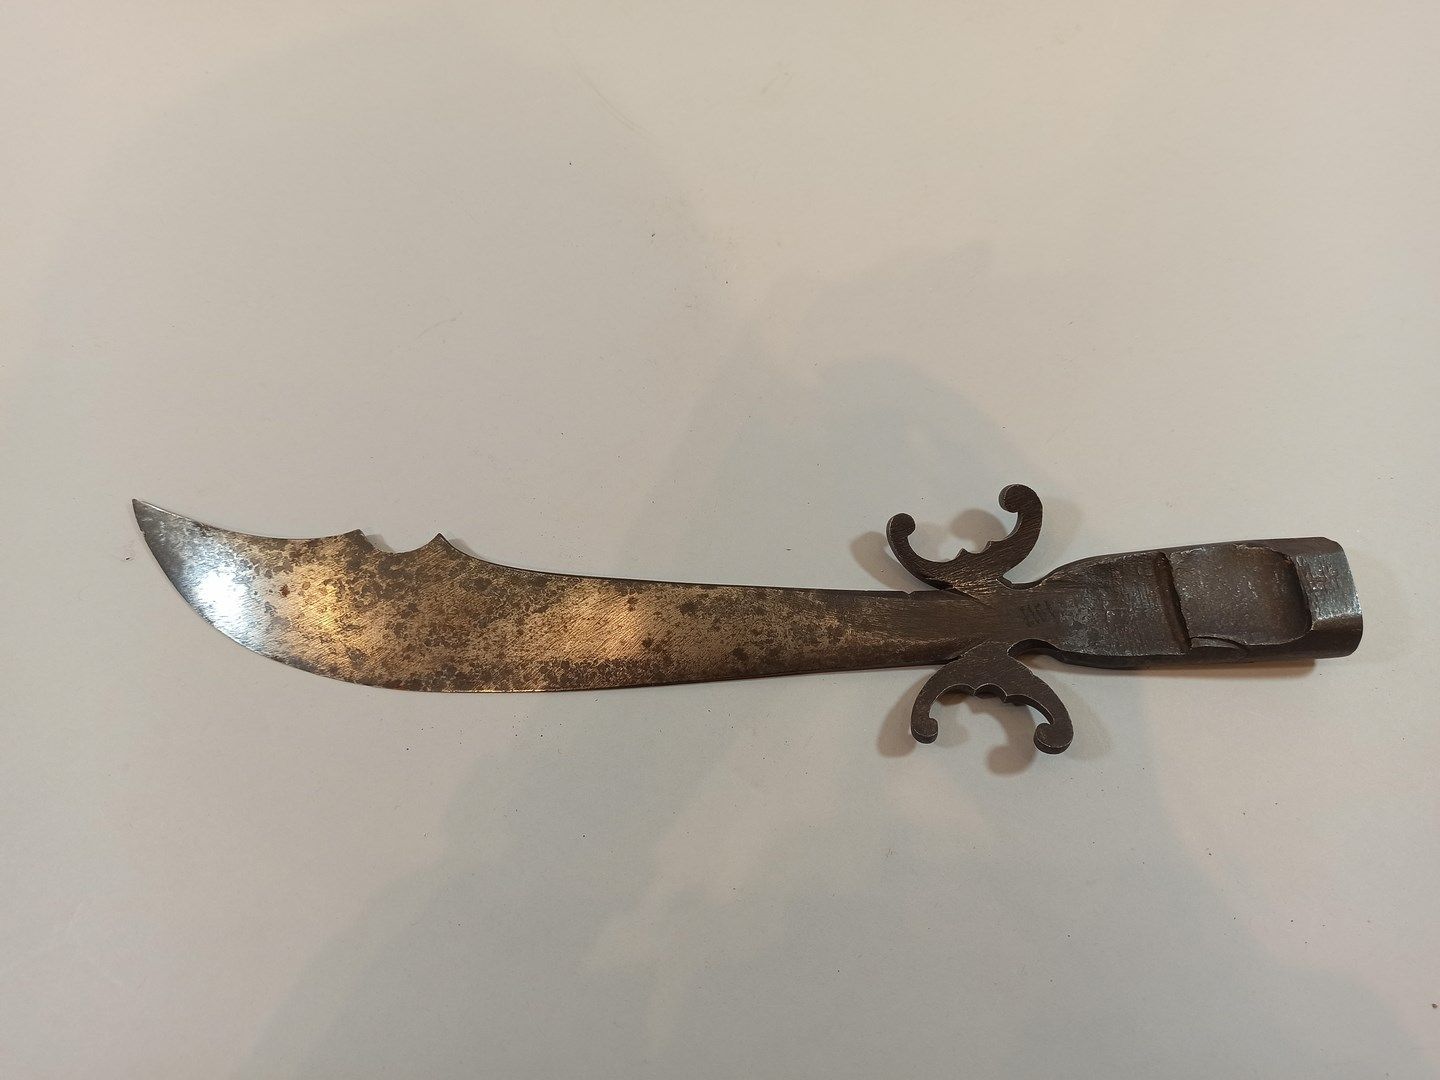 Null 用14-18年战争中签署的凡尔登炮弹制作的匕首。

长度： 37 cm